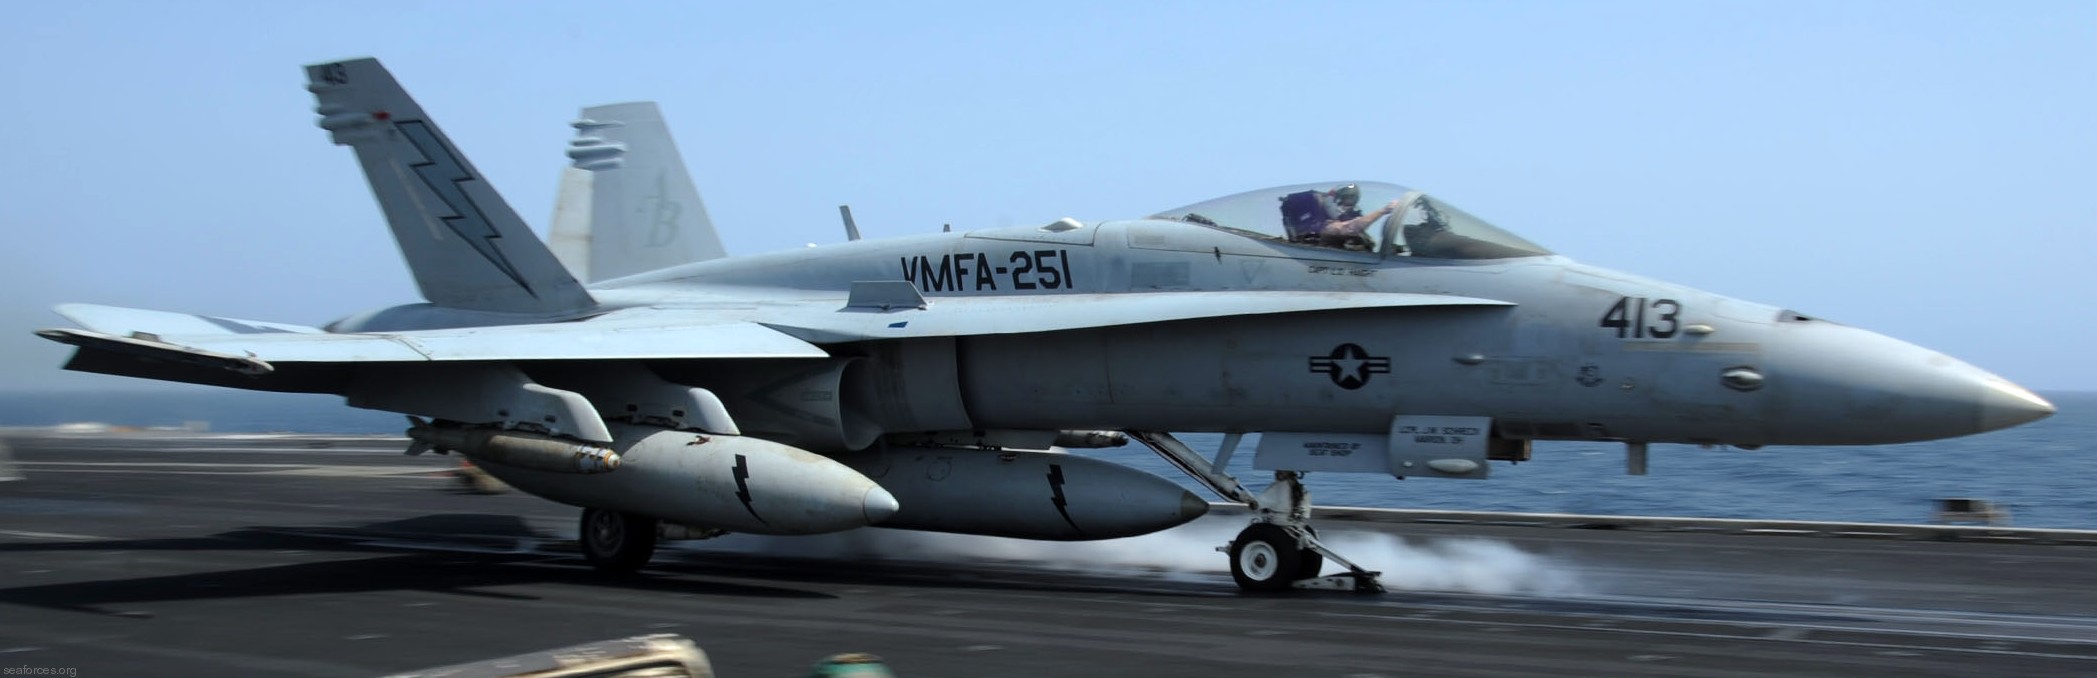 vmfa-251 thunderbolts marine fighter attack squadron f/a-18c hornet cvw-1 uss enterprise cvn-65 24